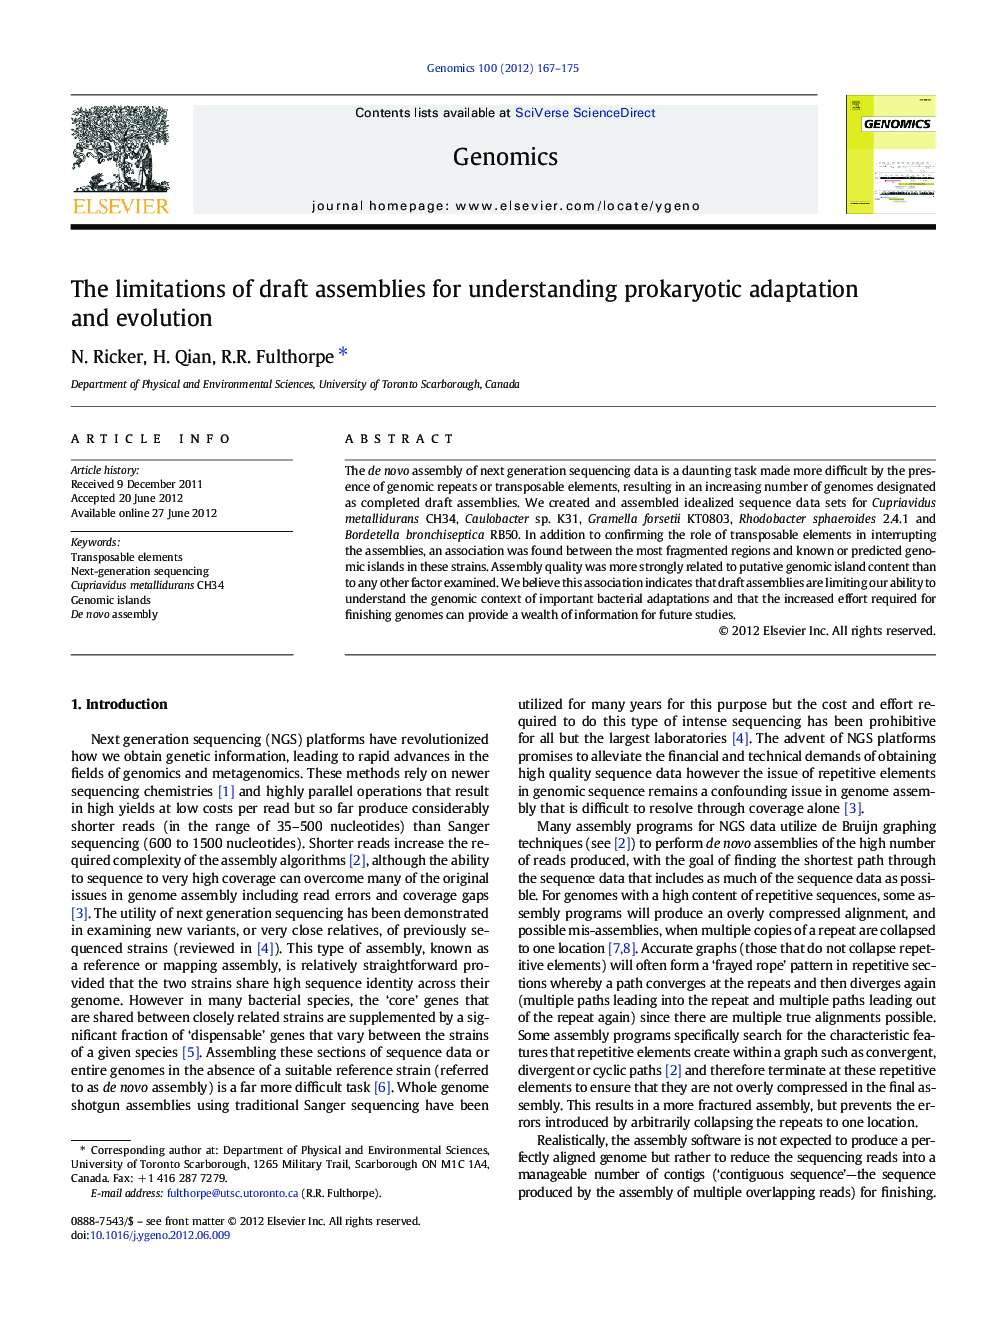 The limitations of draft assemblies for understanding prokaryotic adaptation and evolution